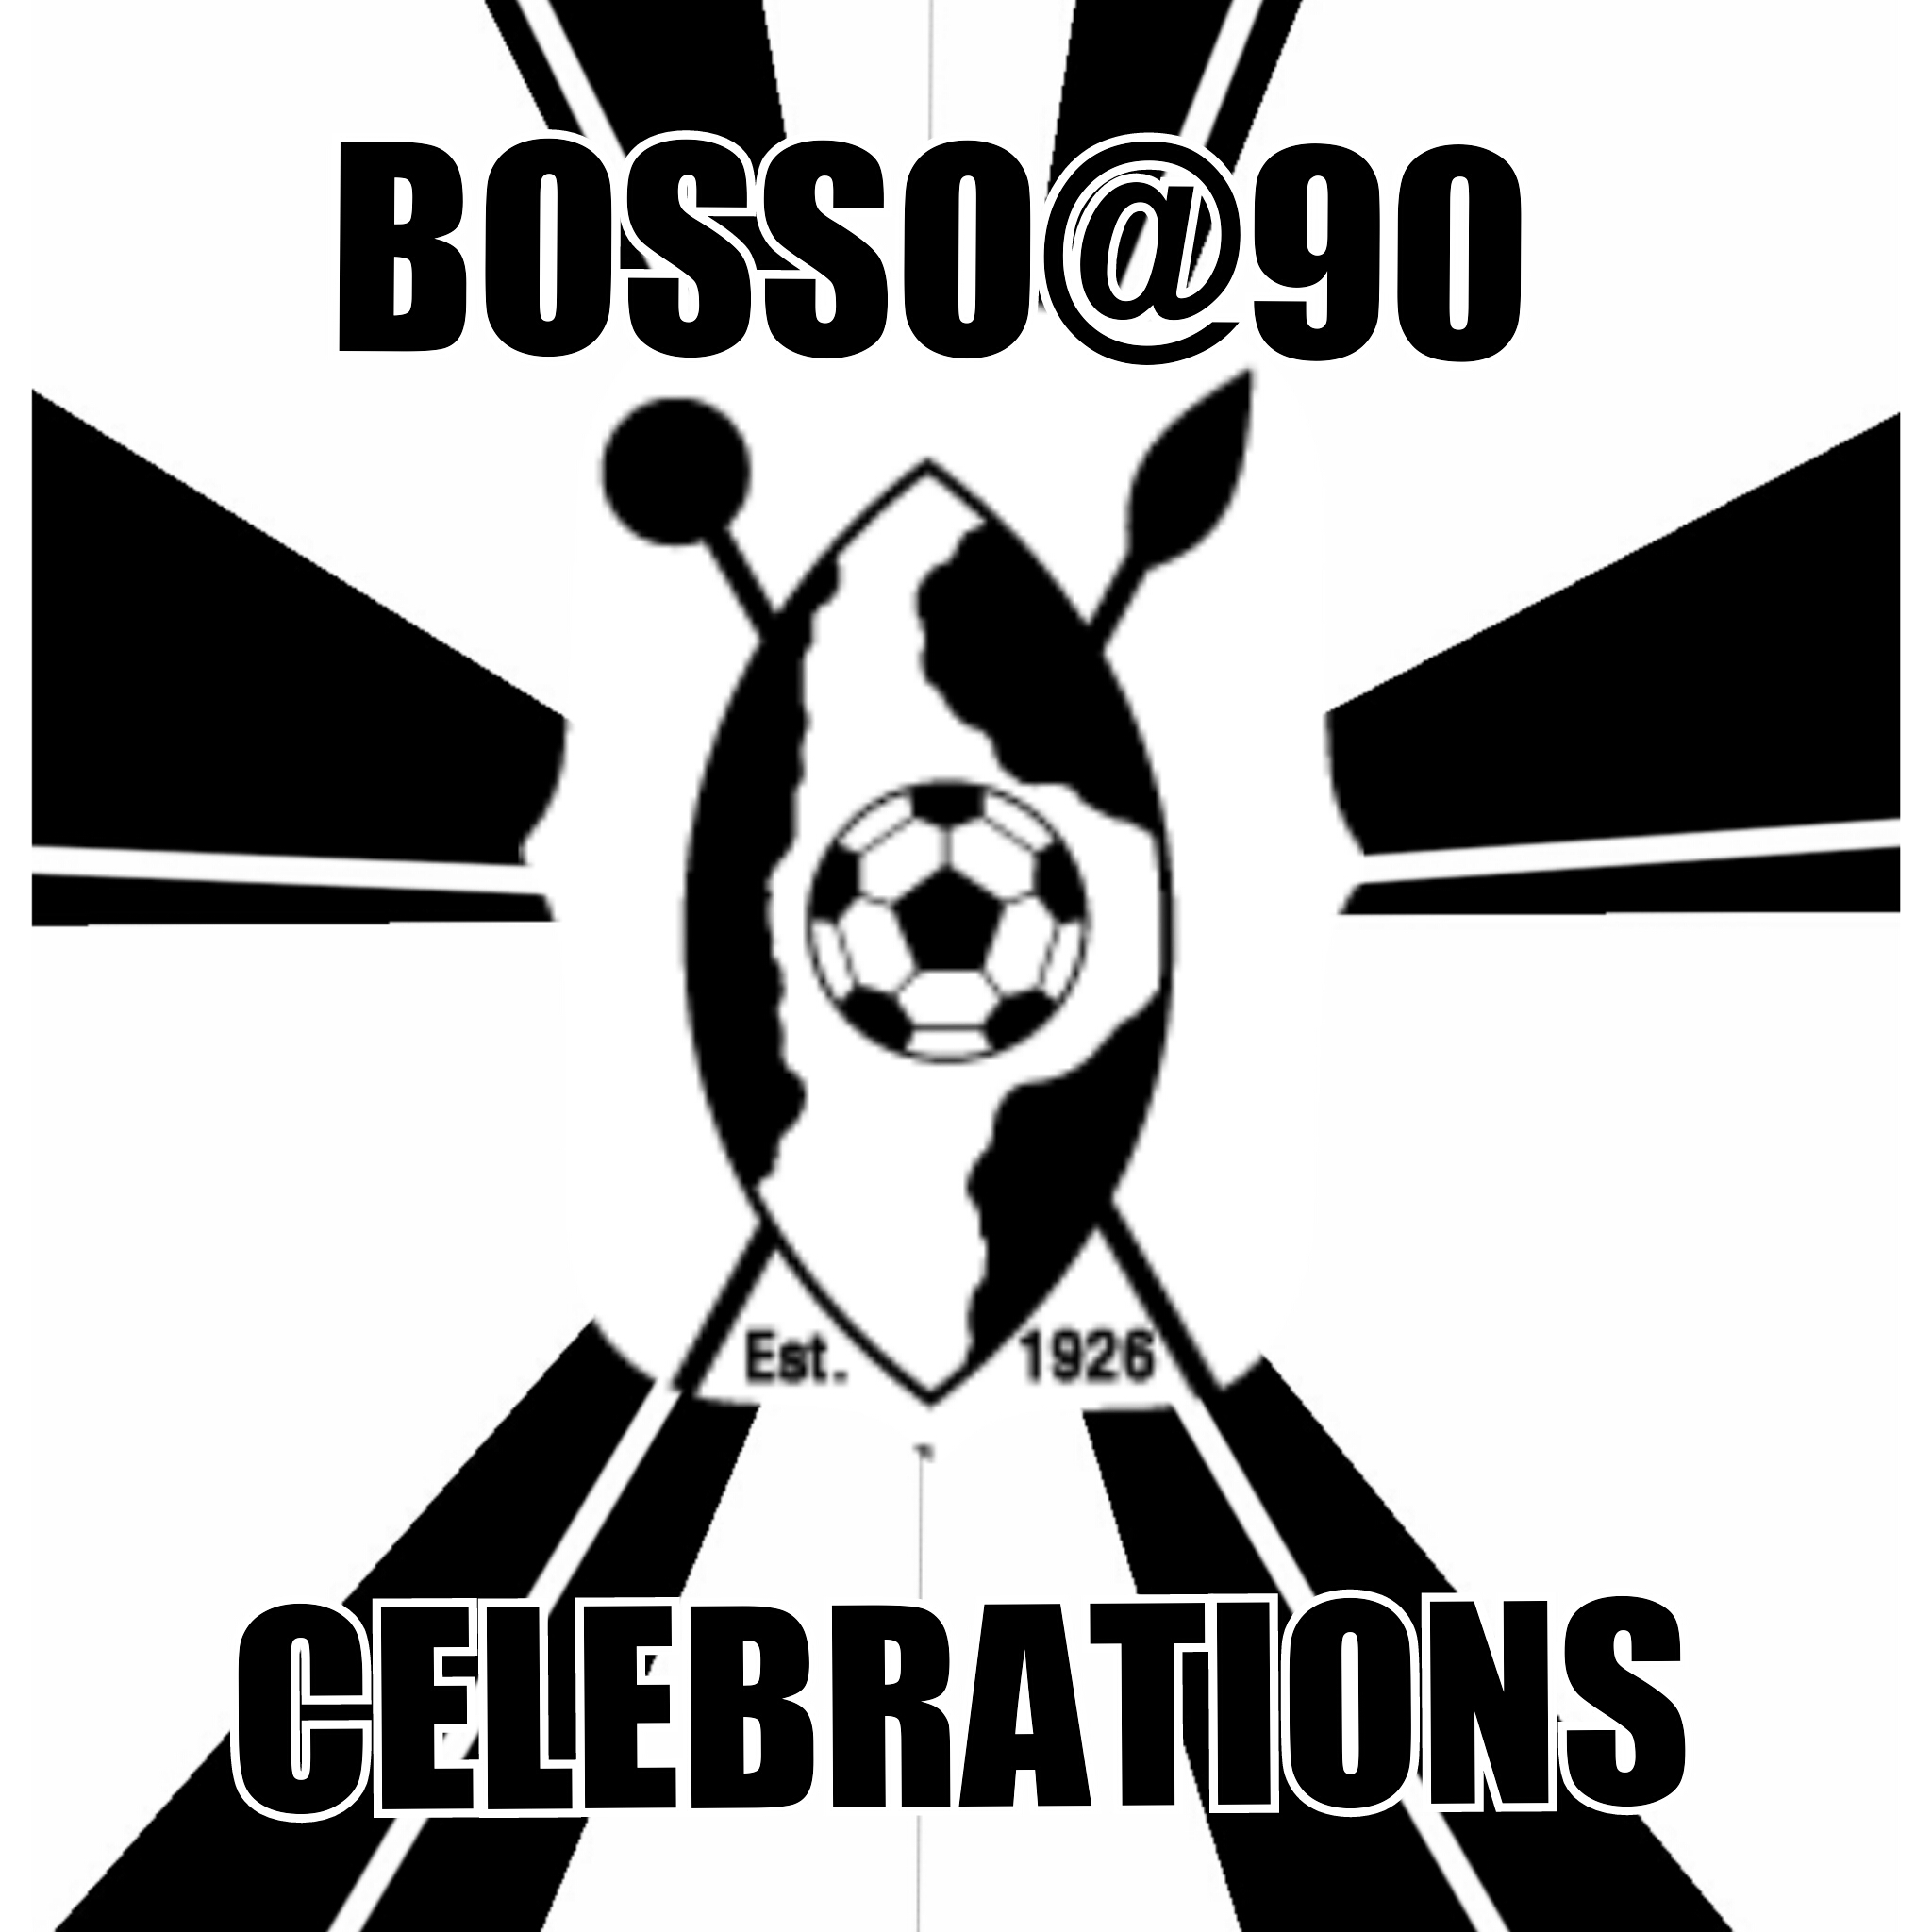 Bosso@90 Celebrations Expect Lobengula's Descendants 